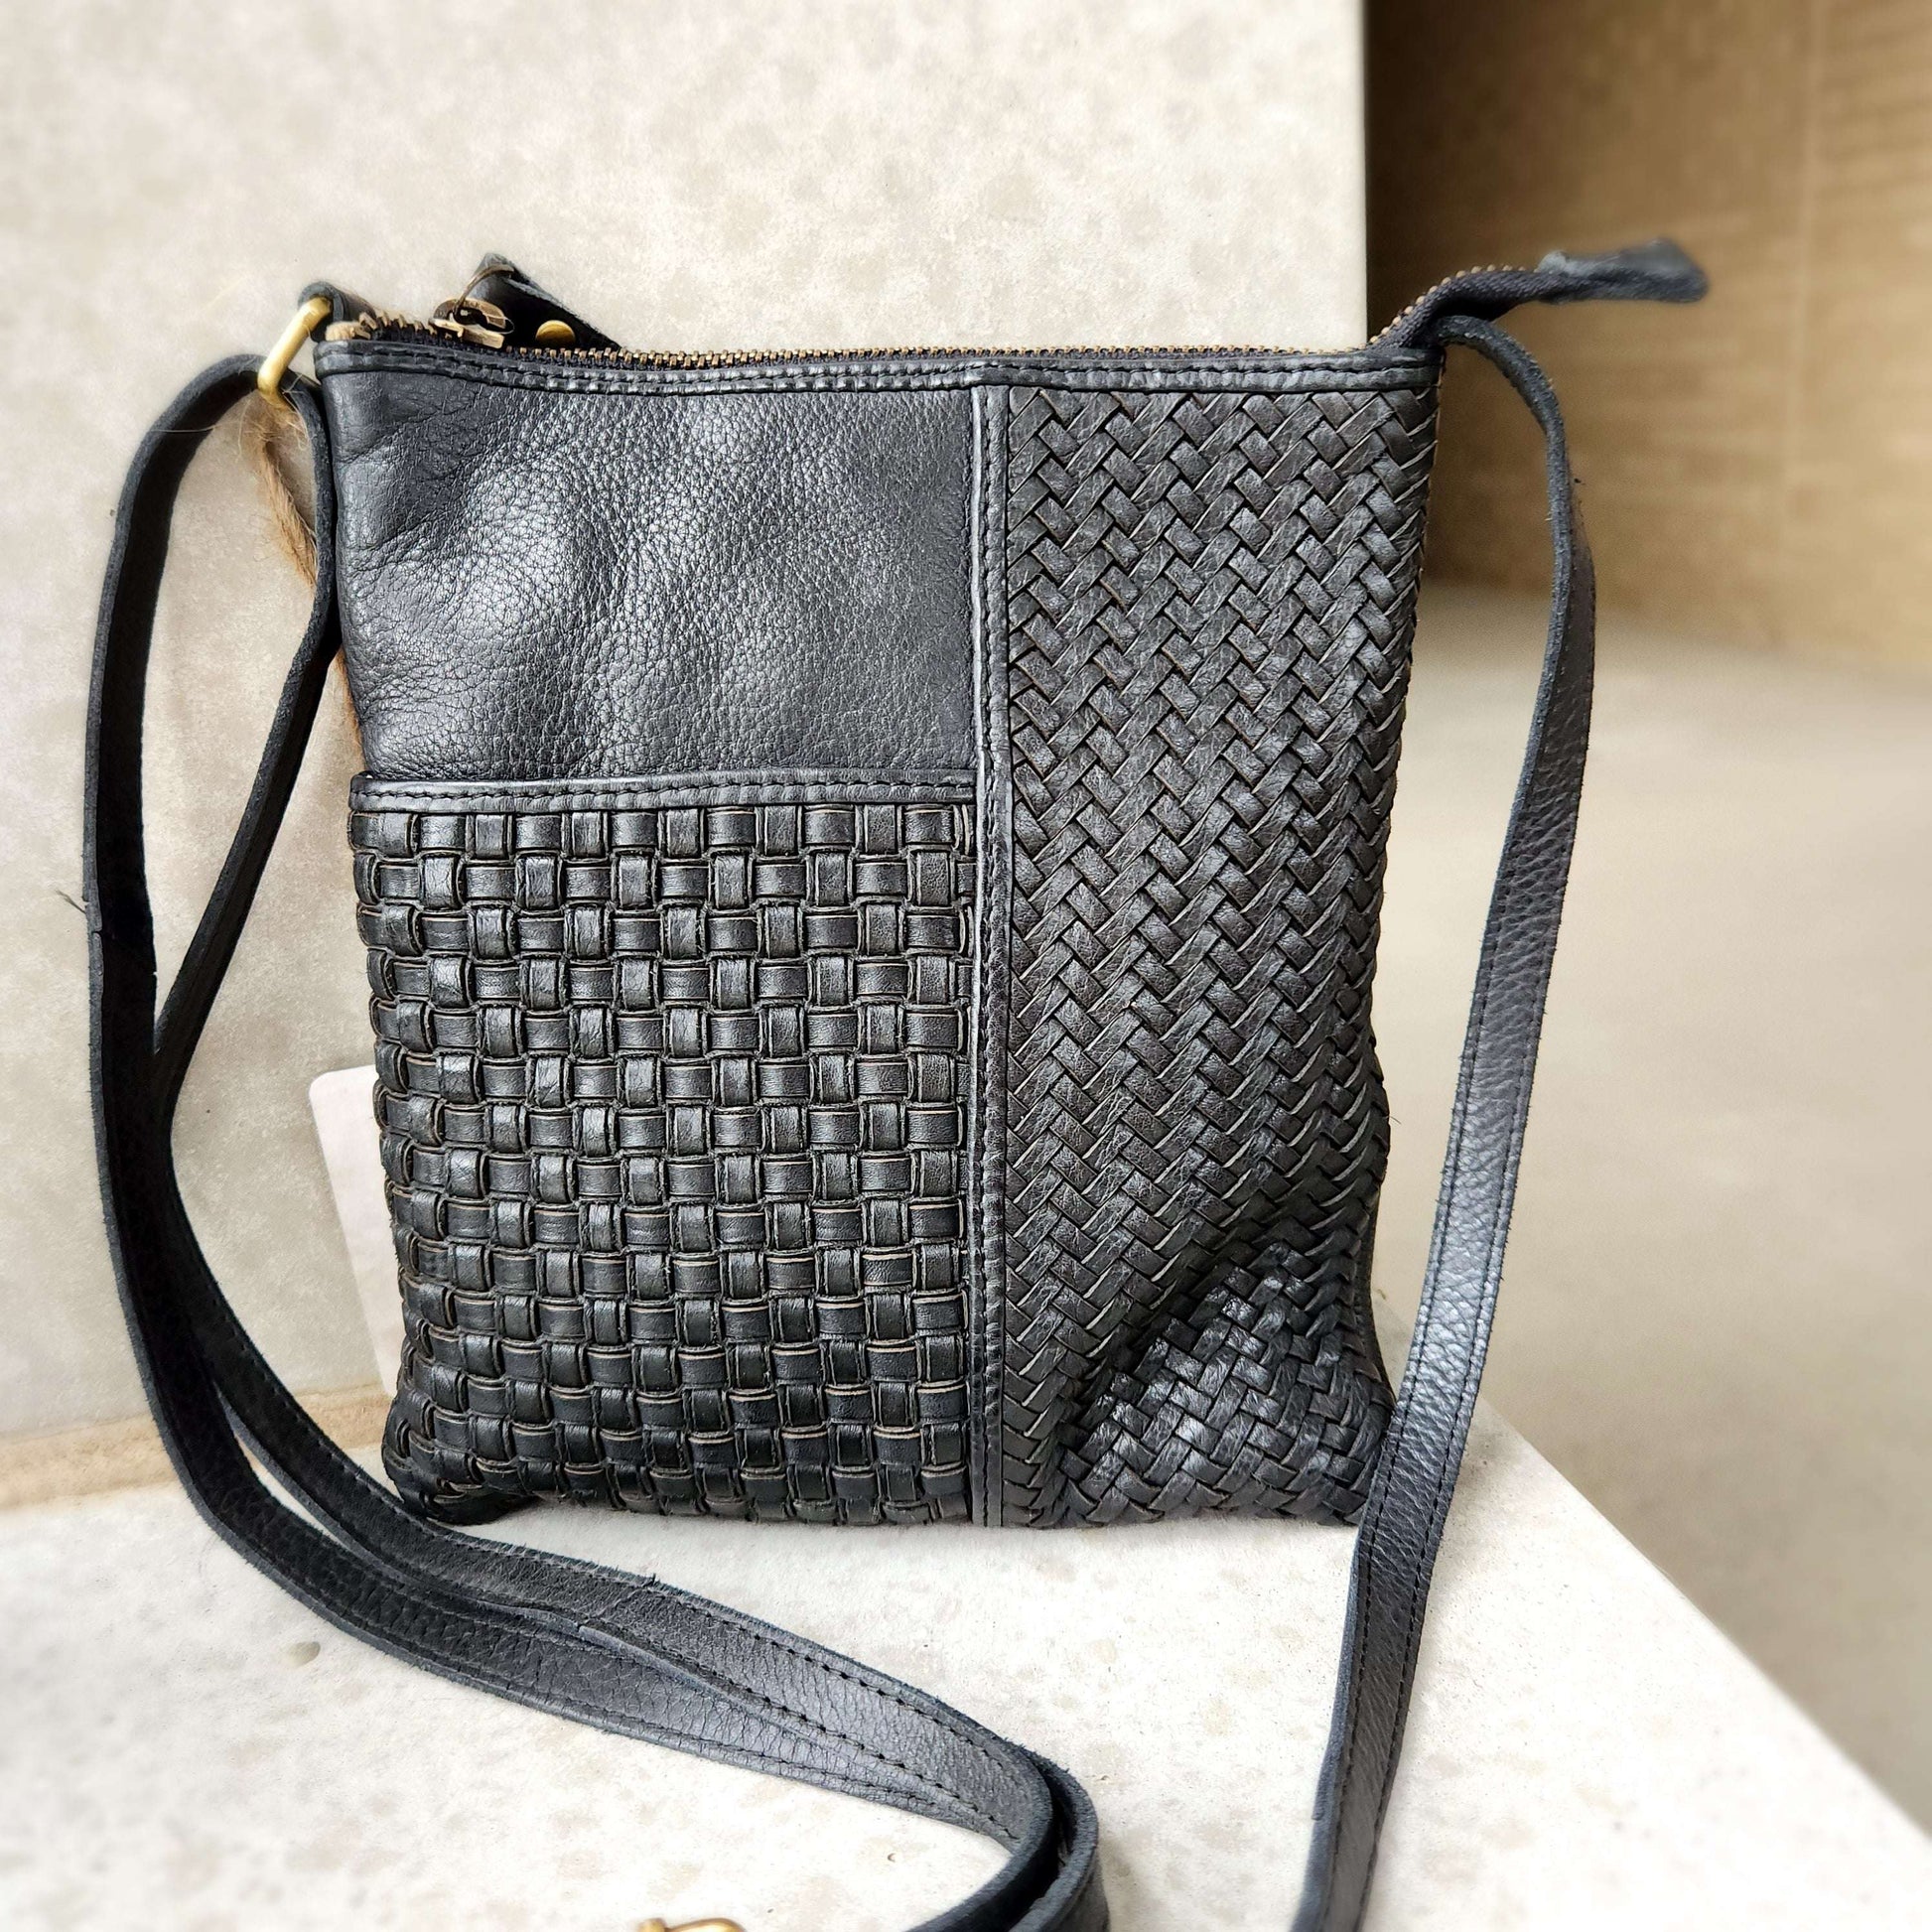 Milo - Pixie Black Leather Crossbody Handbag, ACCESSORIES, milo, Plum Bottom